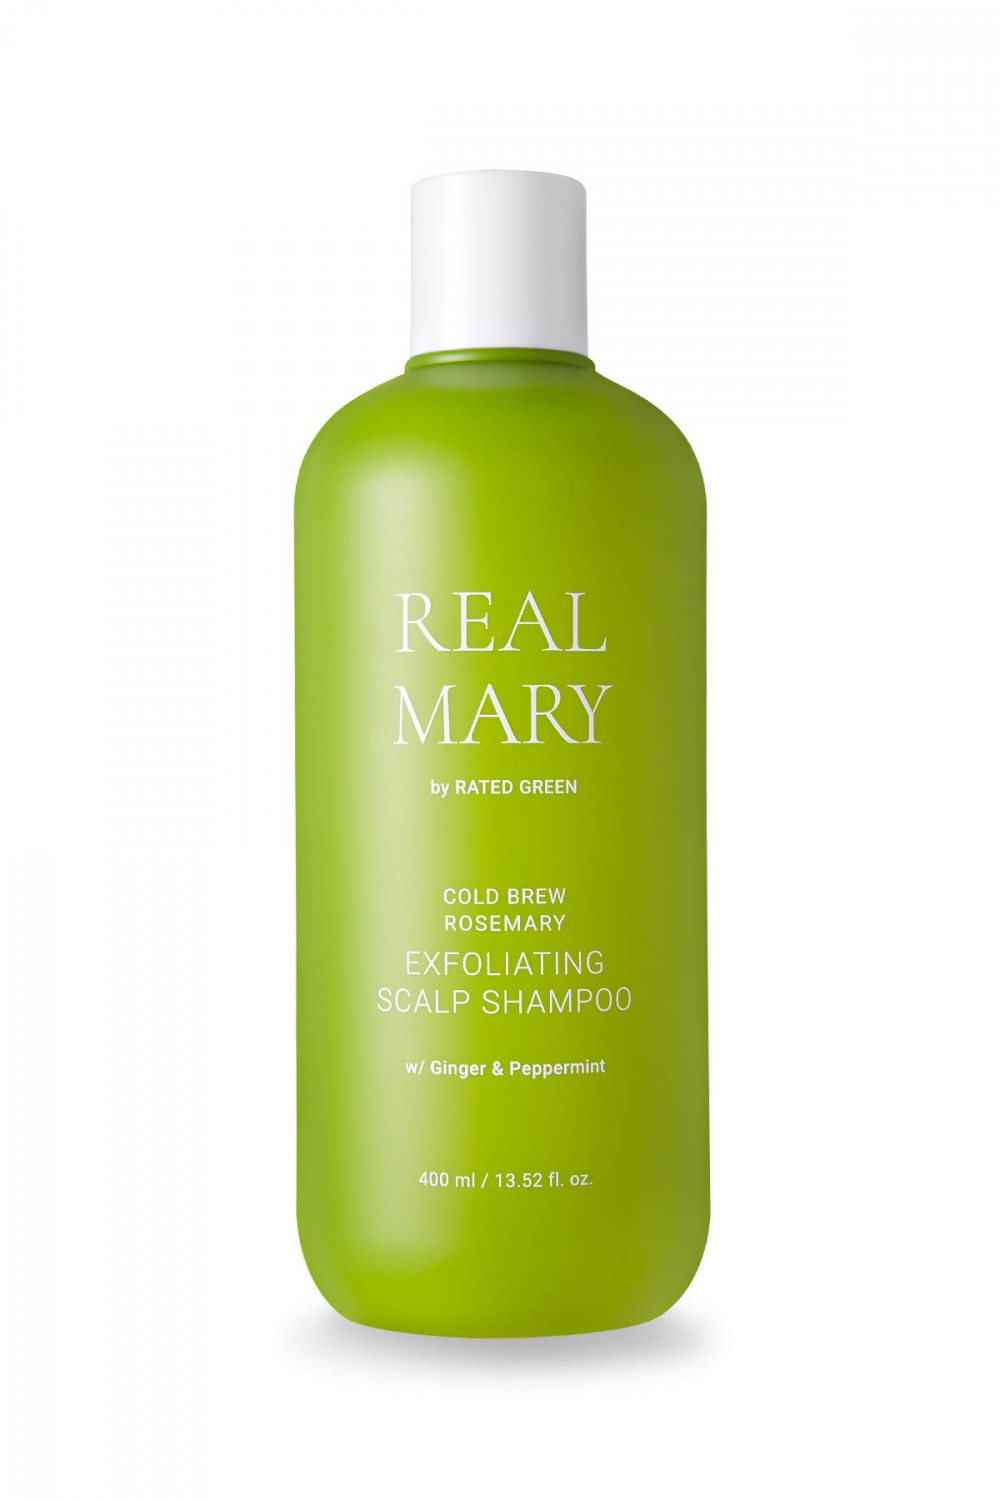 Rated Green Cold Brew Rosemary Exfoliating Scalp Shampoo 400ml - интернет-магазин профессиональной косметики Spadream, изображение 42773